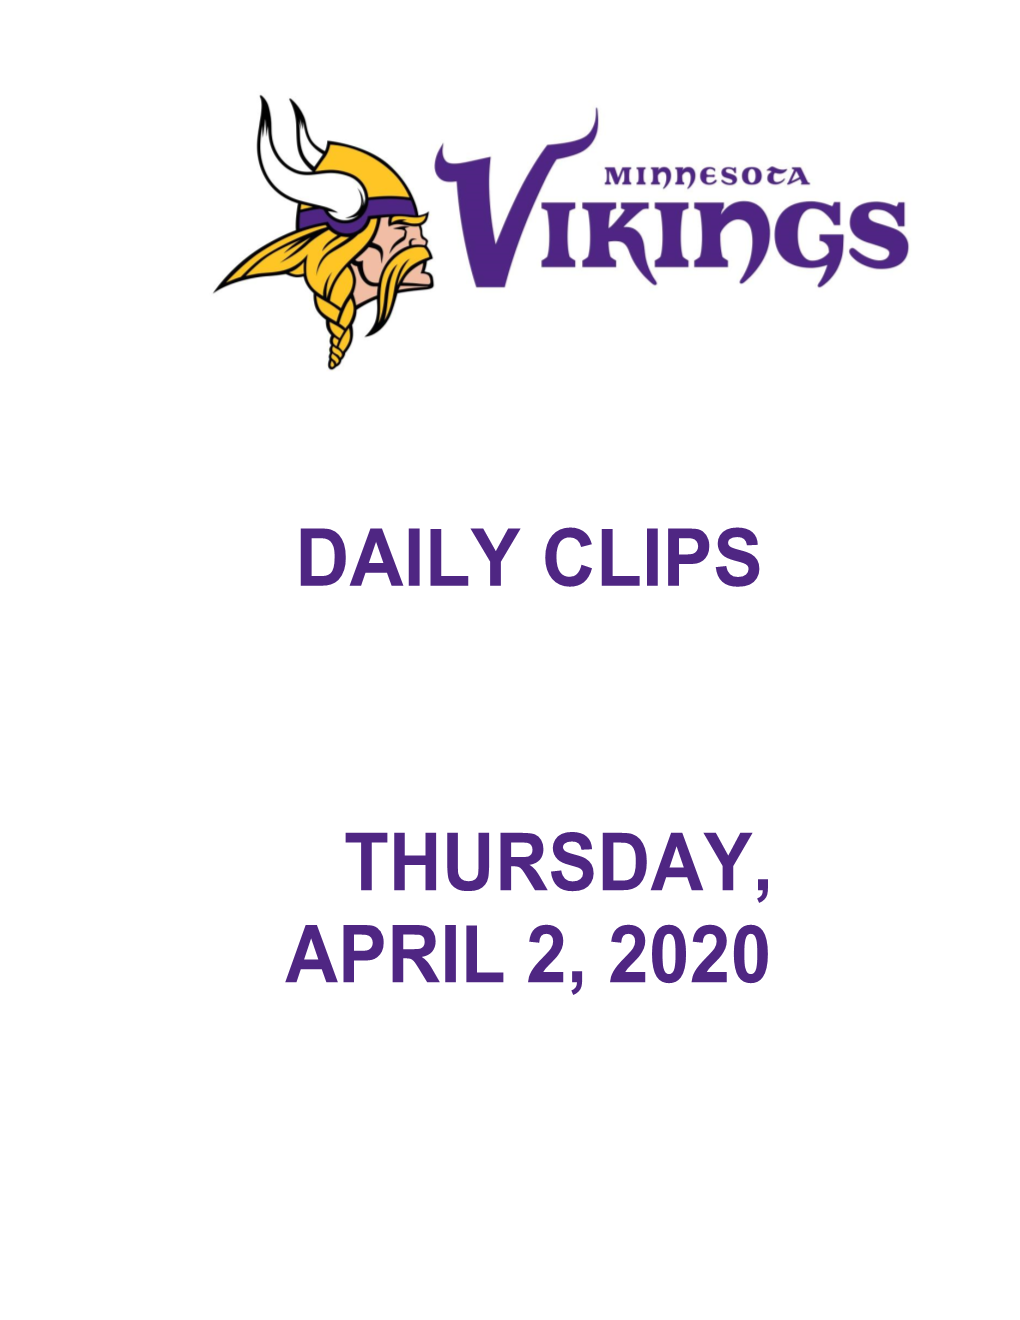 Daily Clips Thursday, April 2, 2020